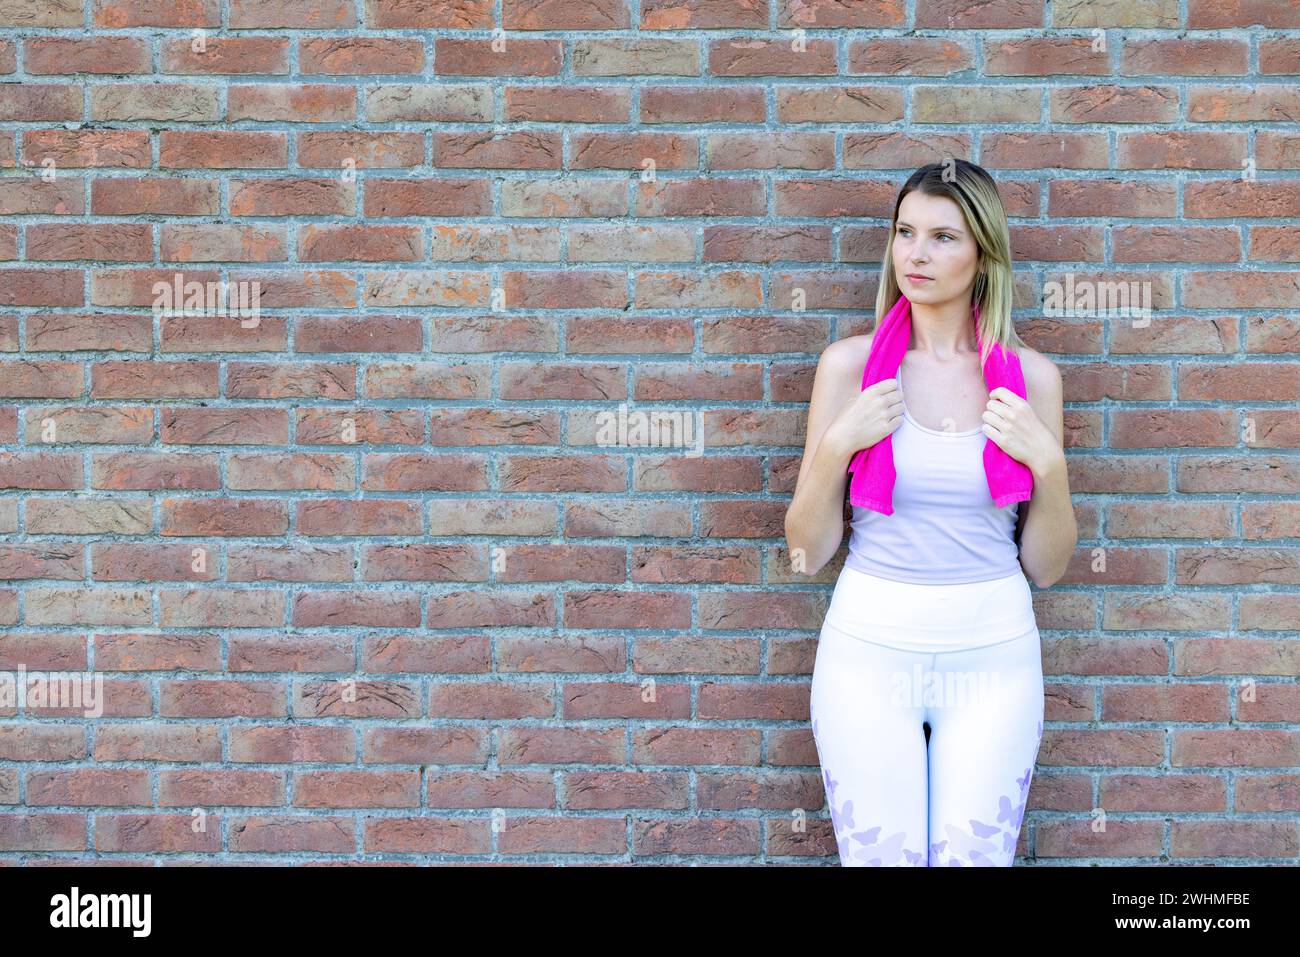 Energetic Fitness Frau, Die Nach Dem Training Pause Macht Stockfoto